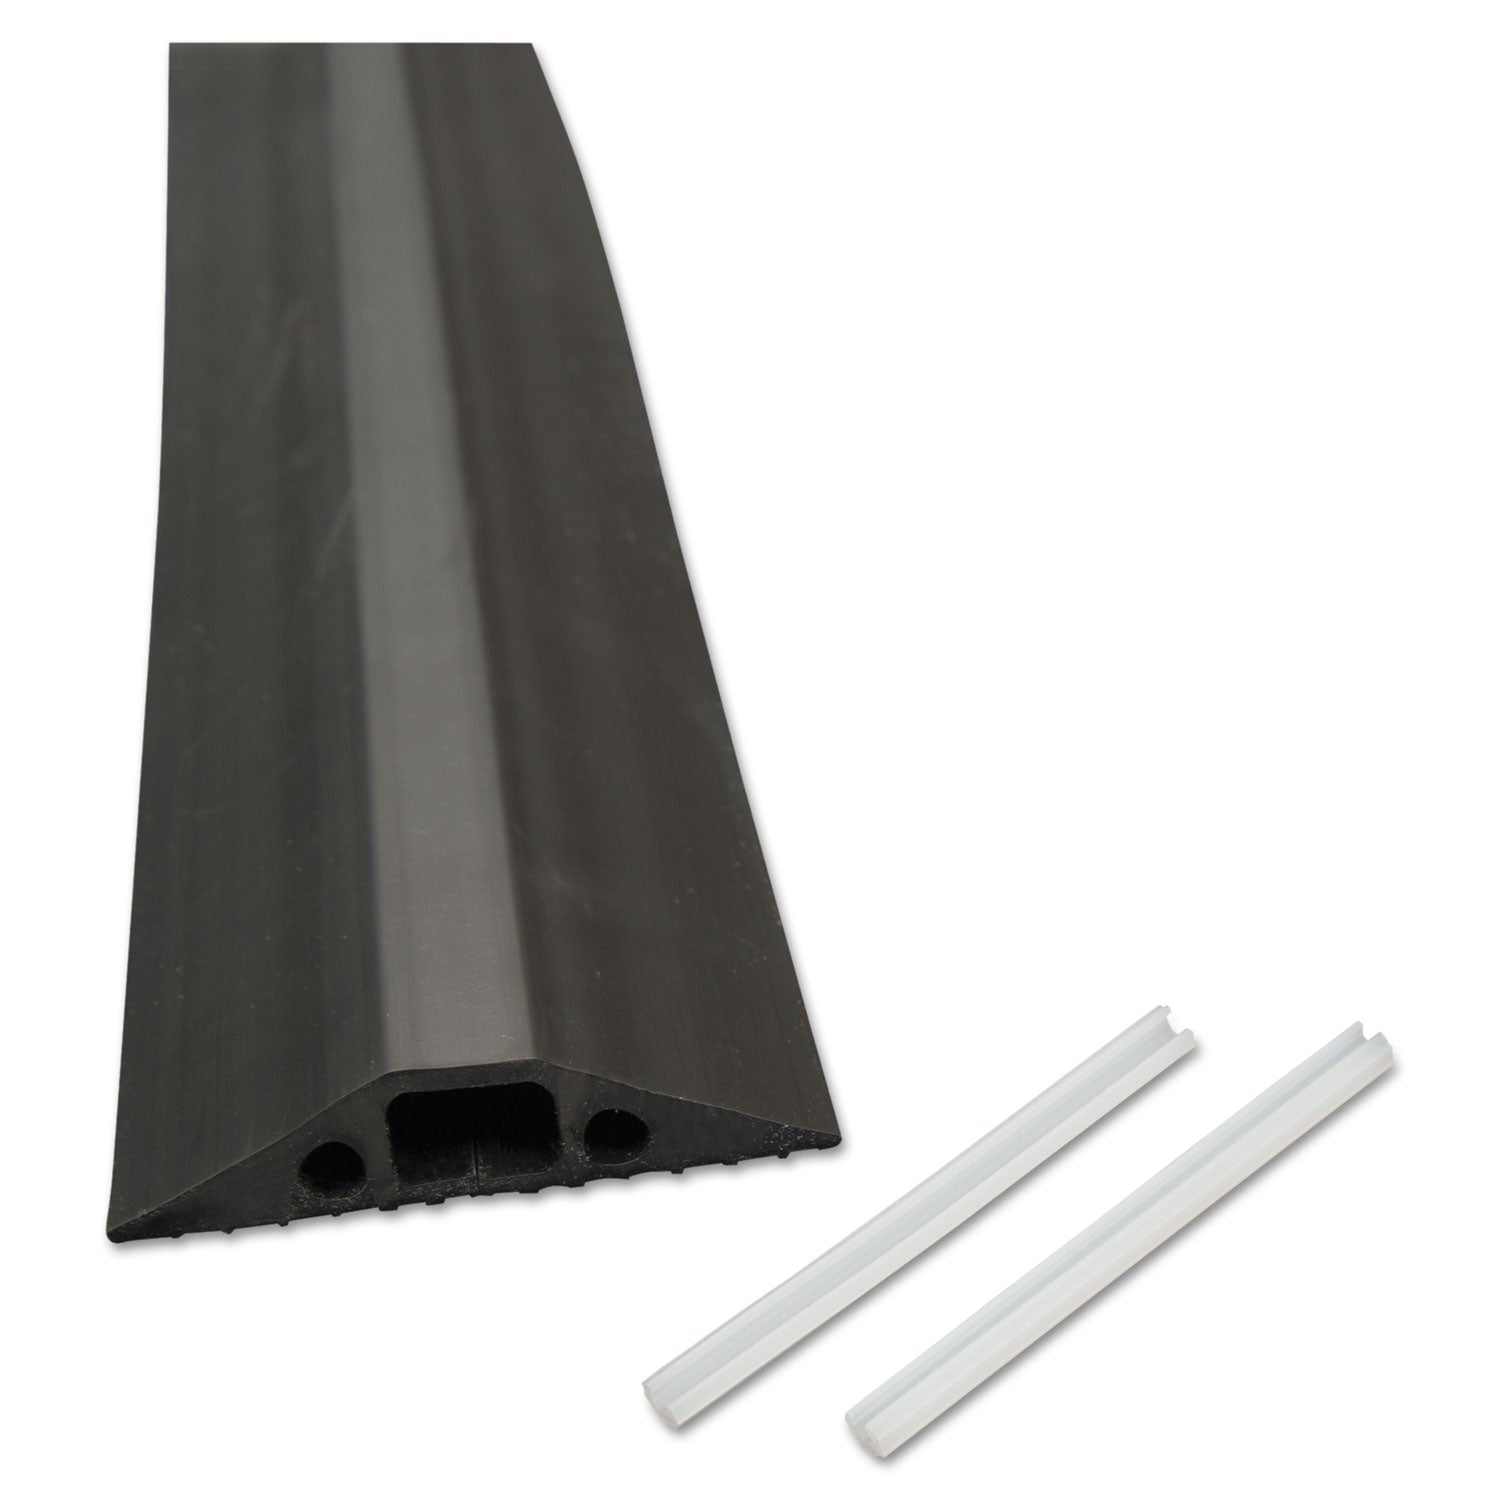 Medium-Duty Floor Cable Cover, 2.75 x 0.5 x 6 ft, Black - 